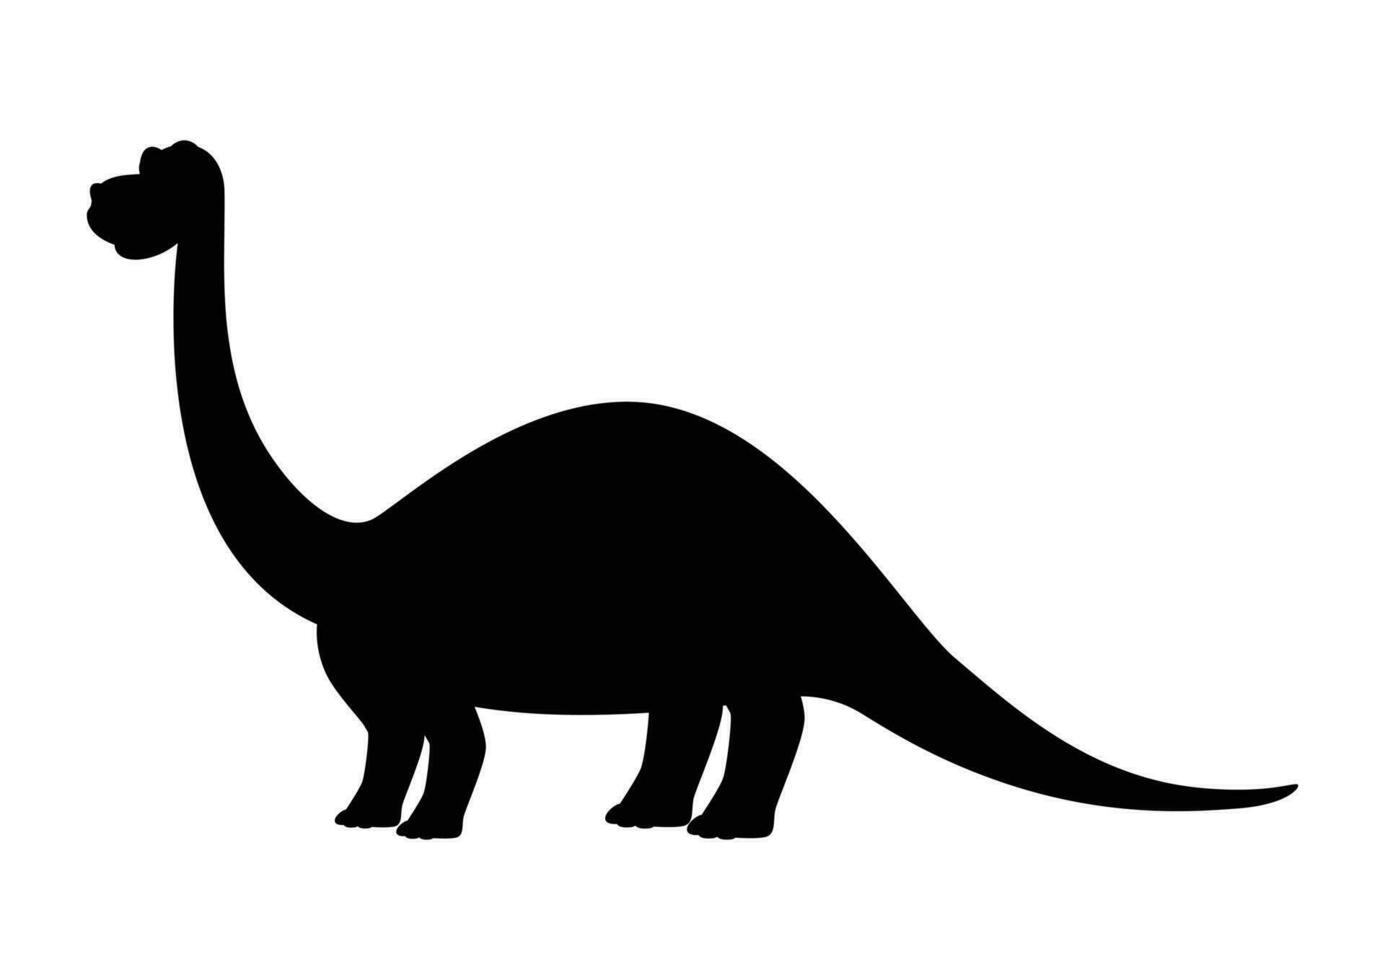 Brontosaurus Dinosaur Silhouette Vector Isolated on White Background